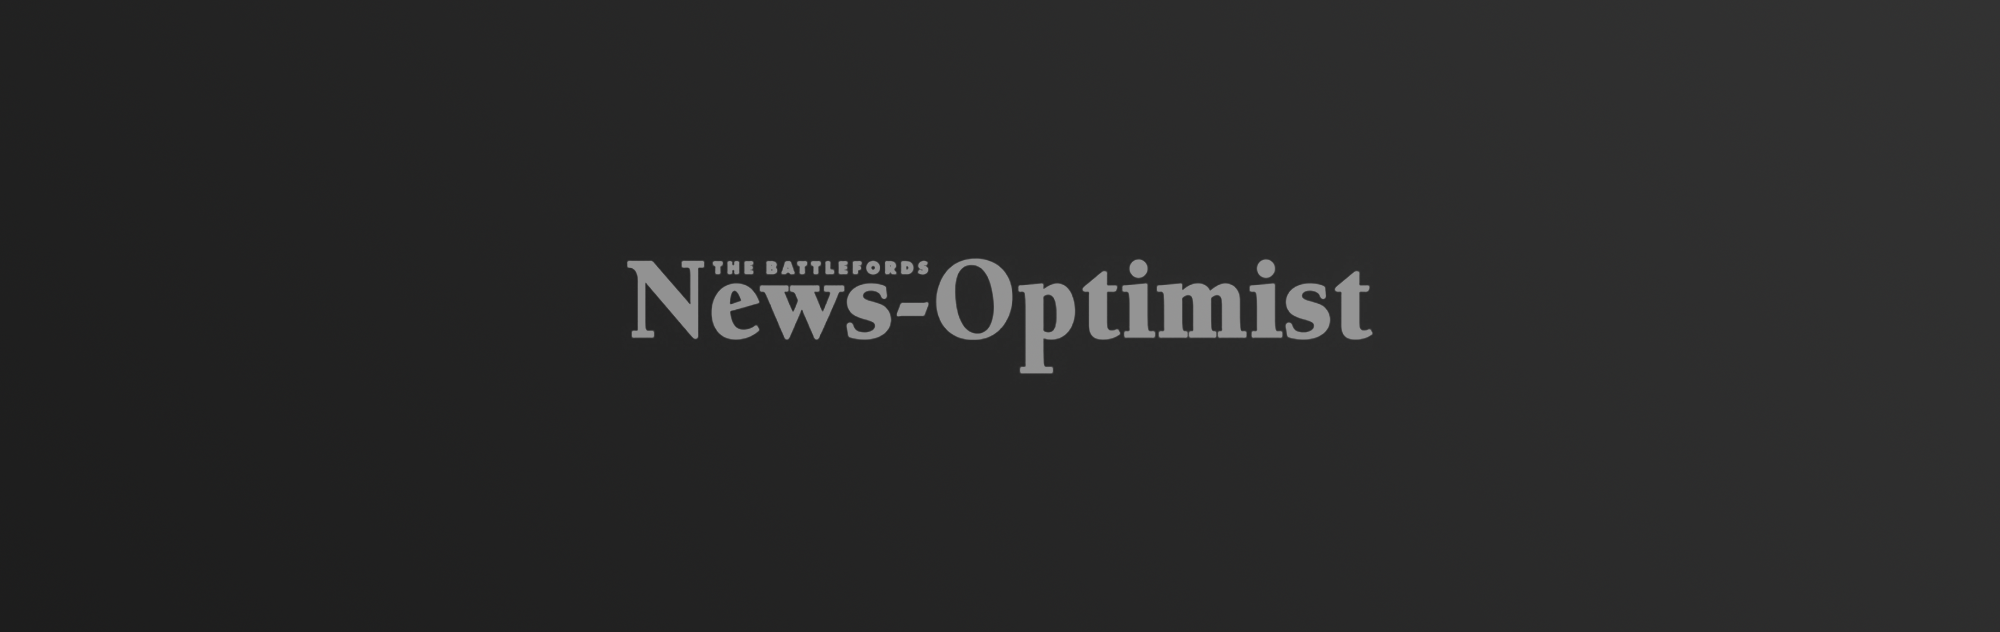 The Battlefords News-Optimist